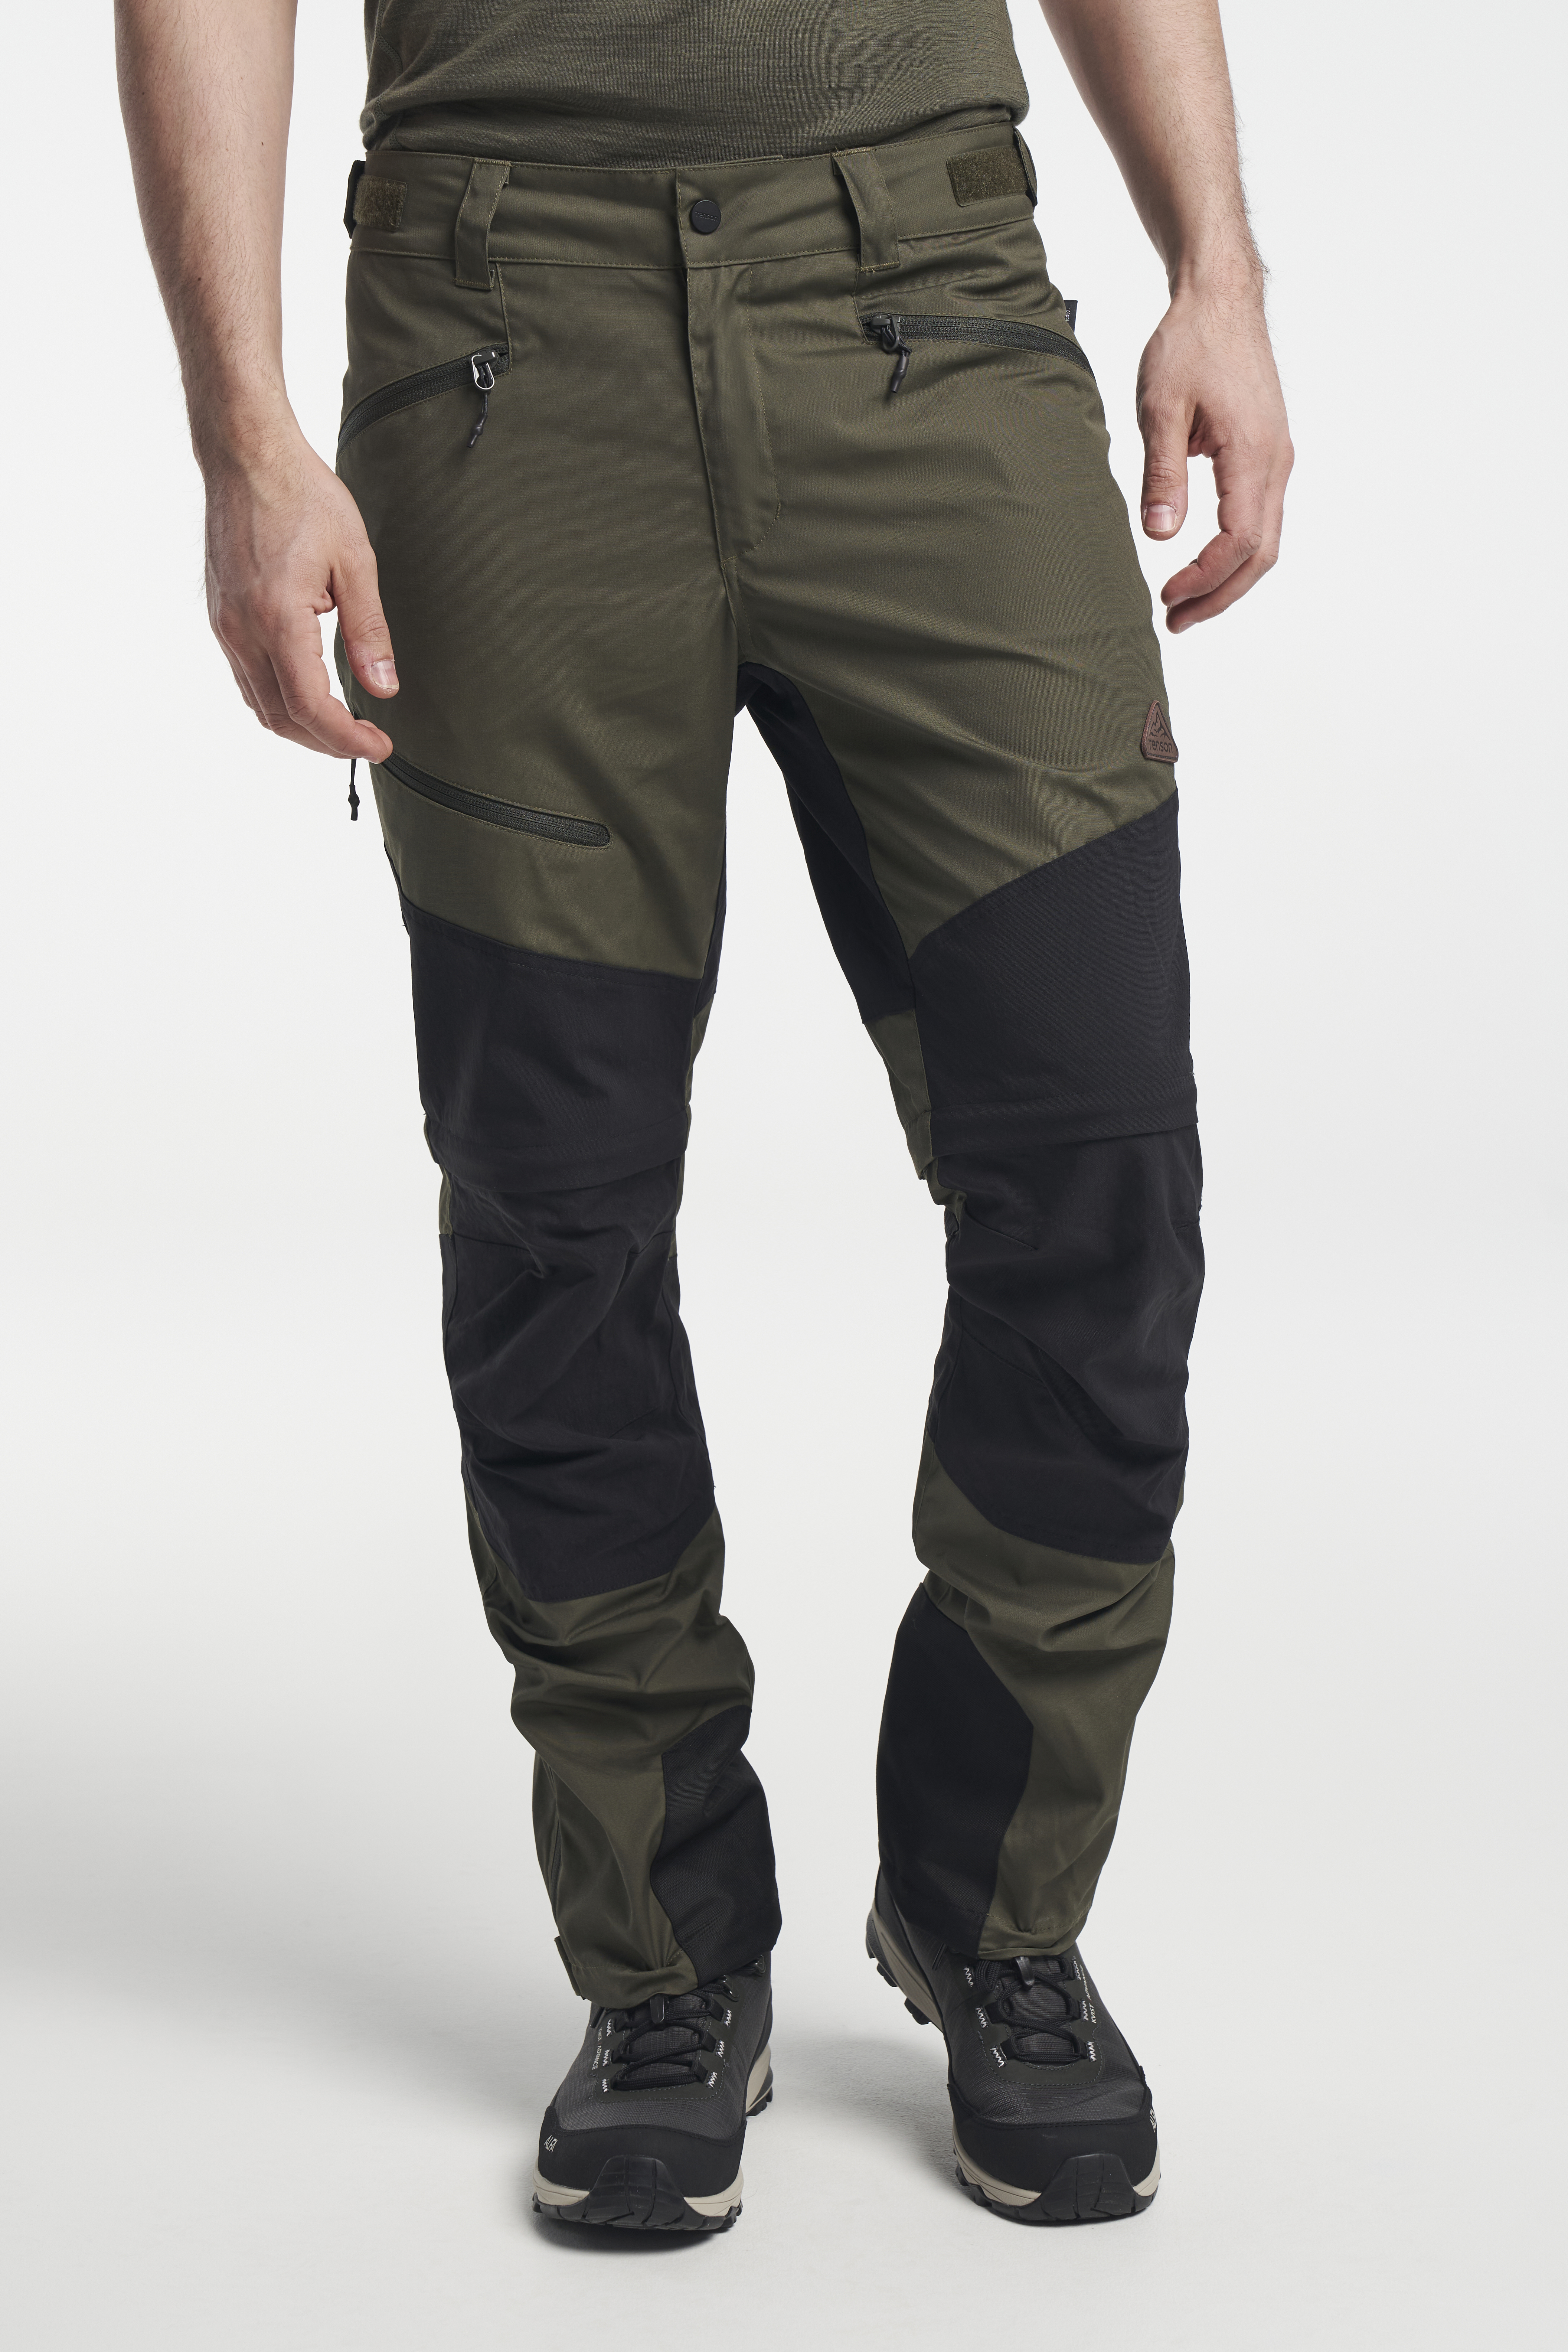 Buy Mens Hiking Pants Quick Dry Outdoor Lightweight Convertible Fishing Zip  Off Cargo Work Pants TrousersGrey36 at Amazonin